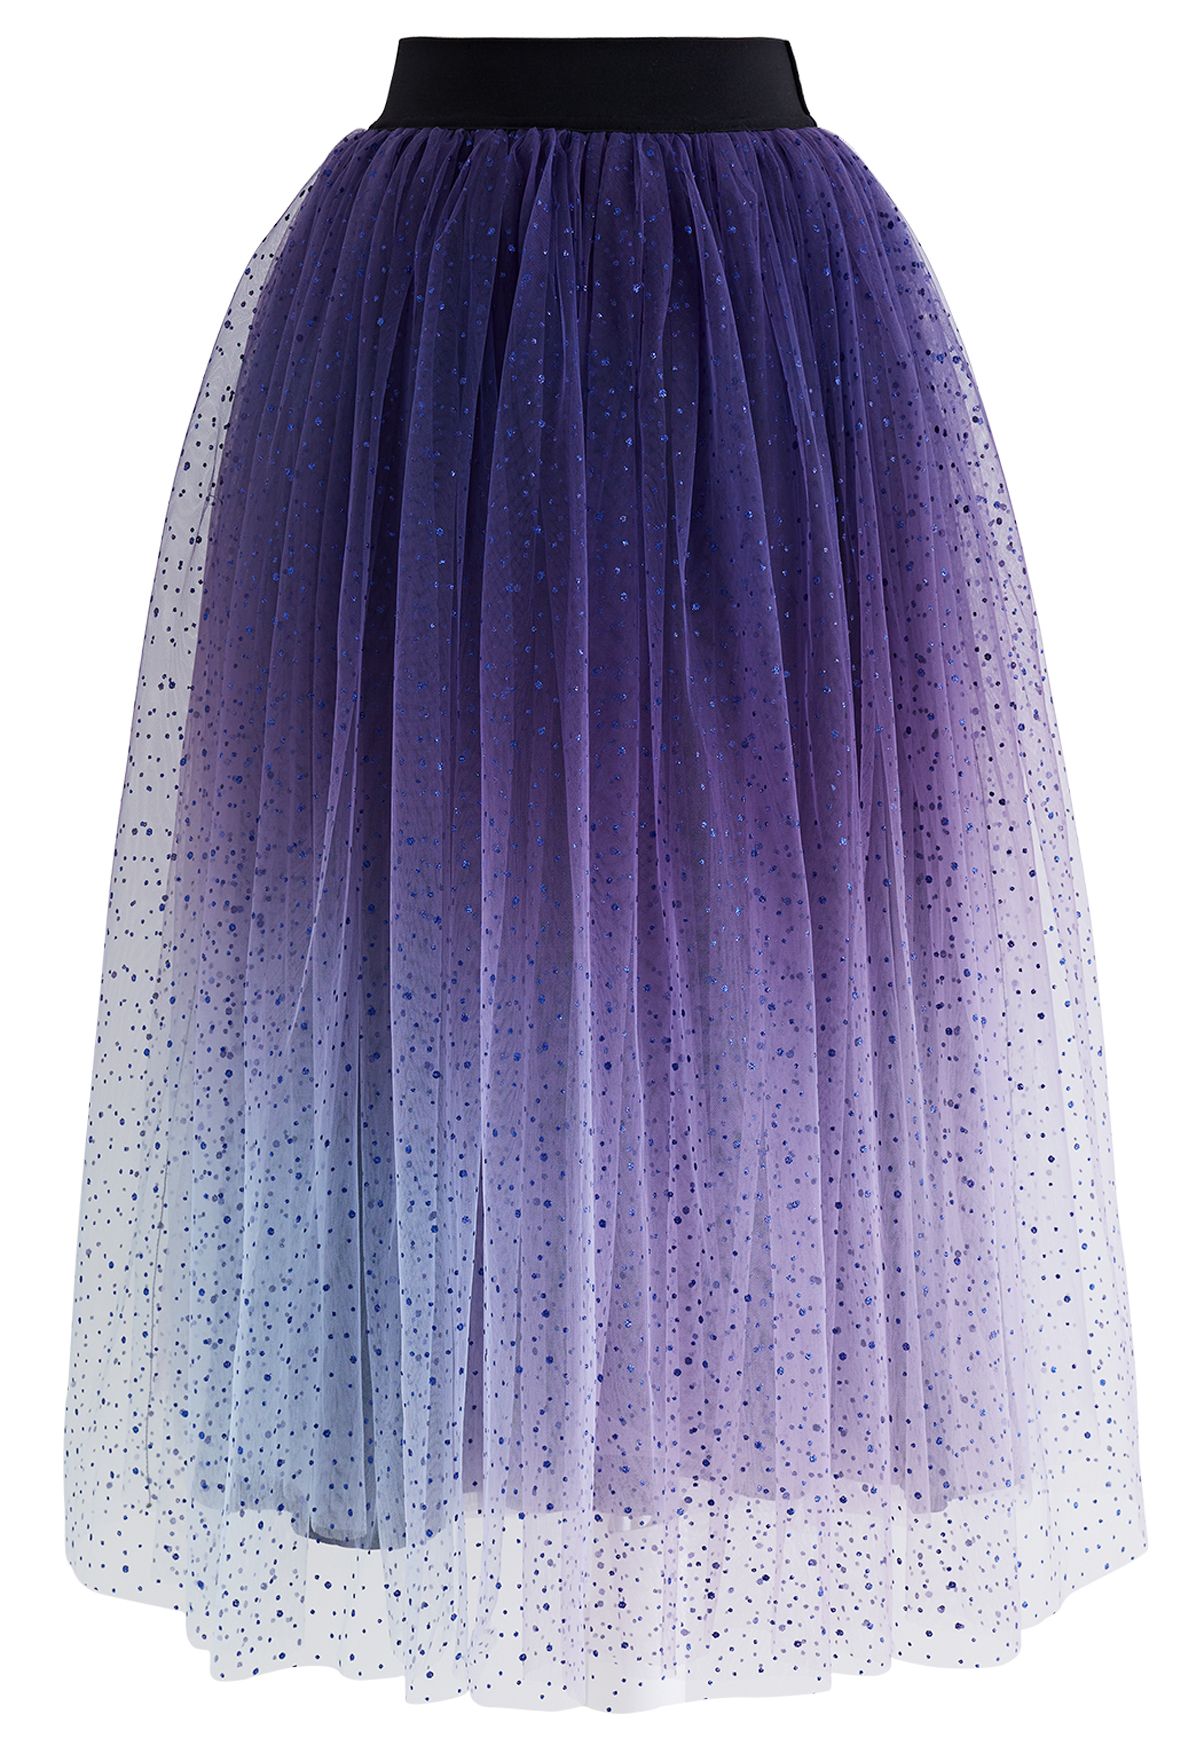 Festive Sparkle Ombre Tulle Midi Skirt in Purple